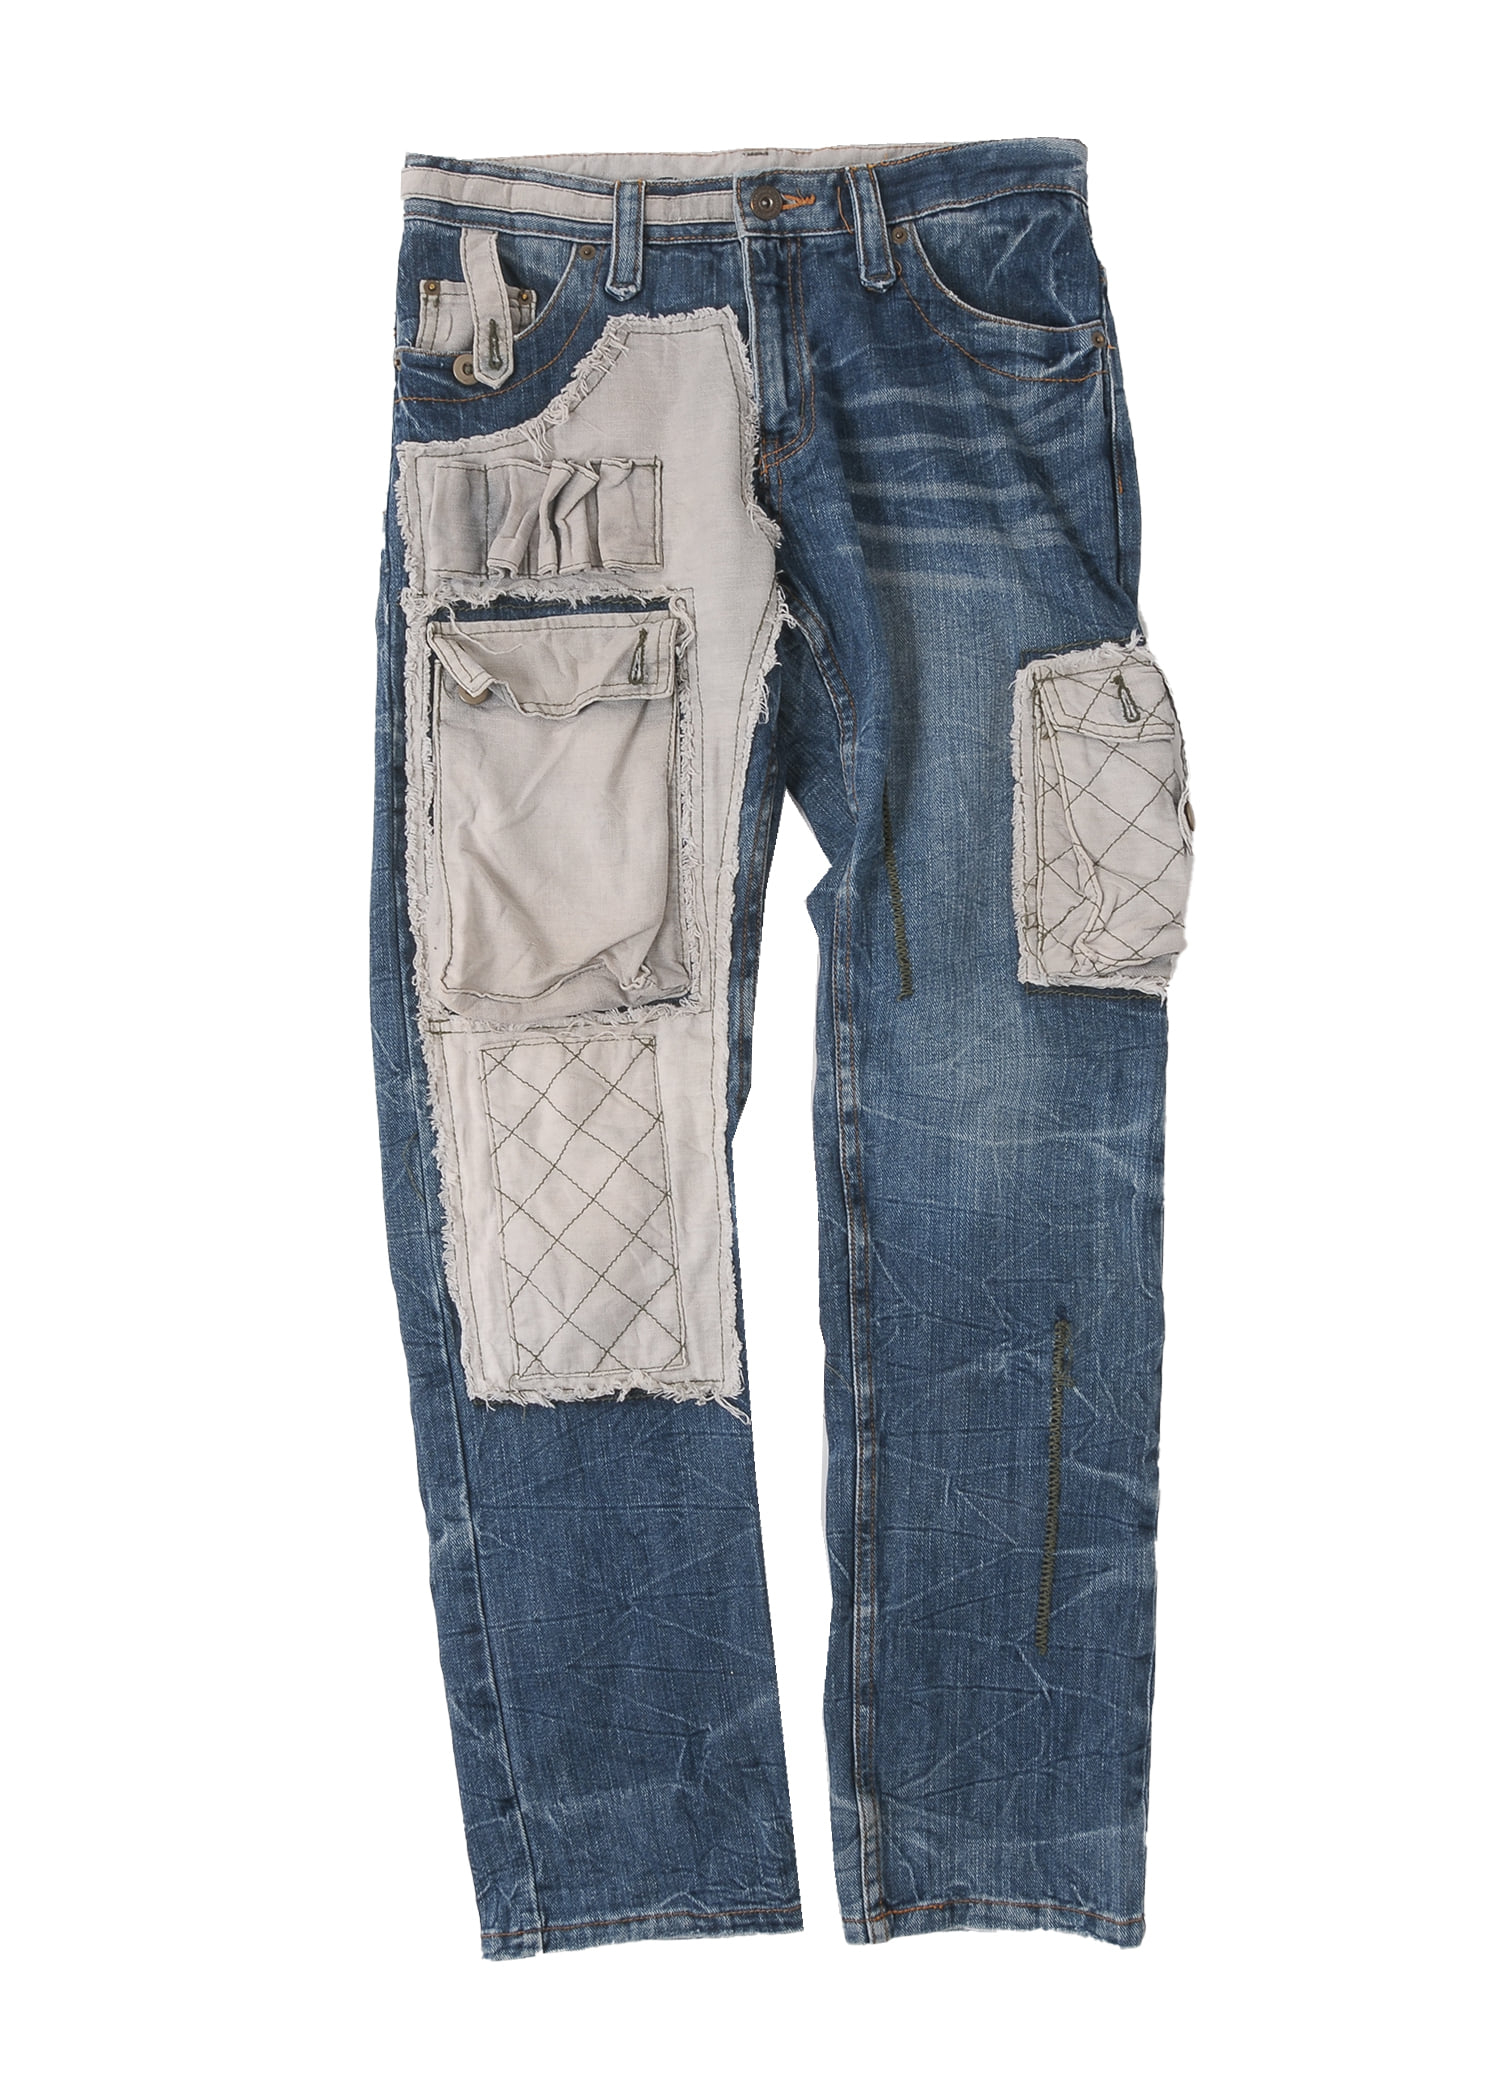 select vintage : denim layer pants